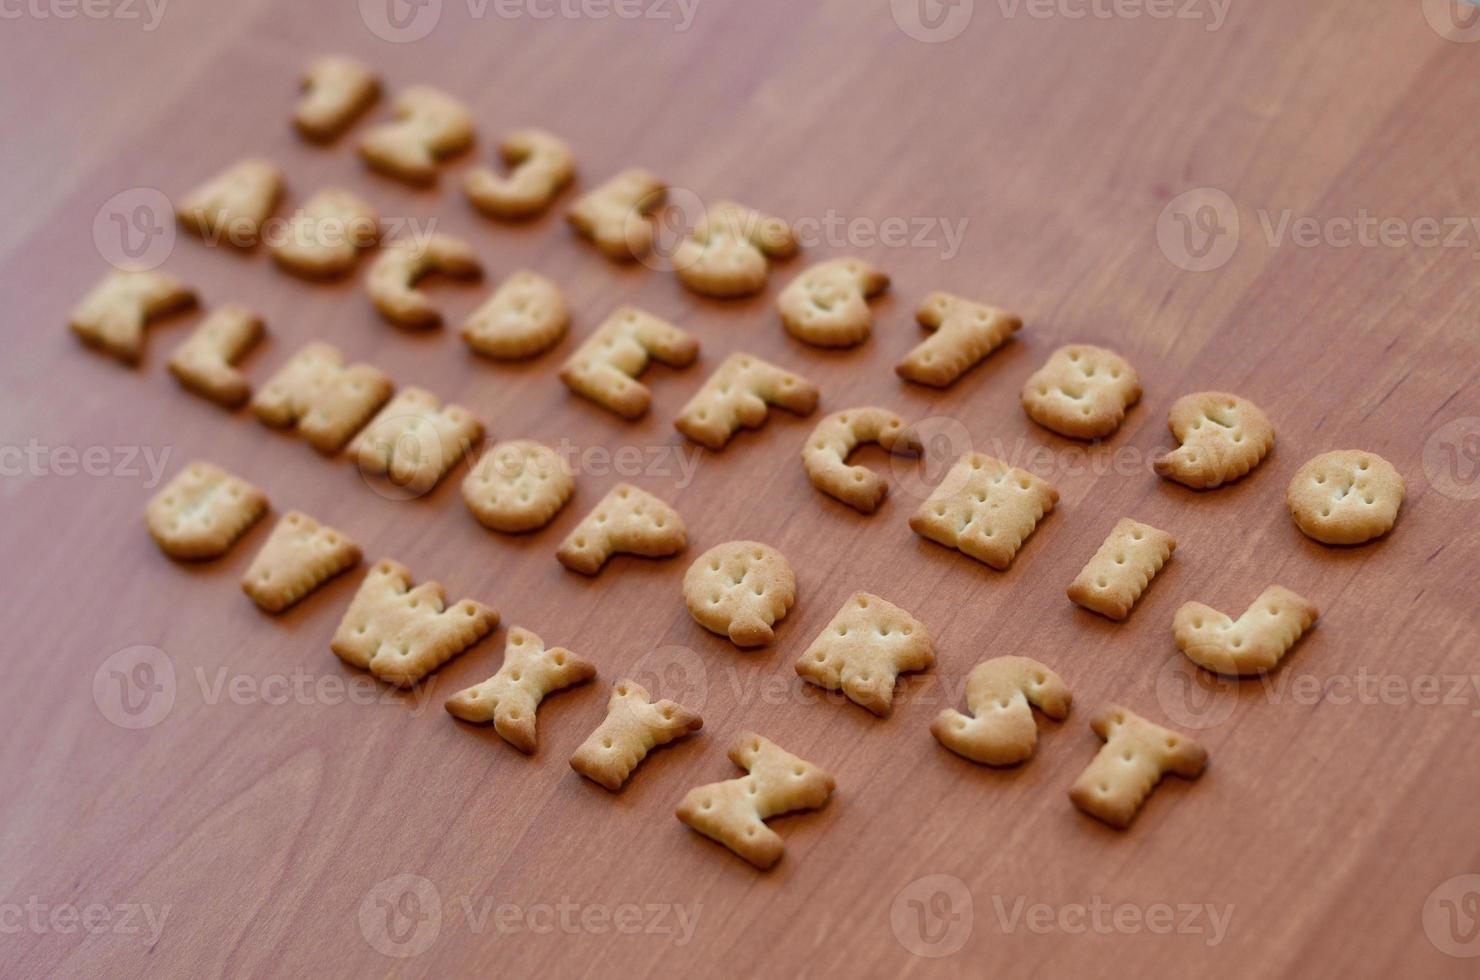 Cracker alphabet characters photo